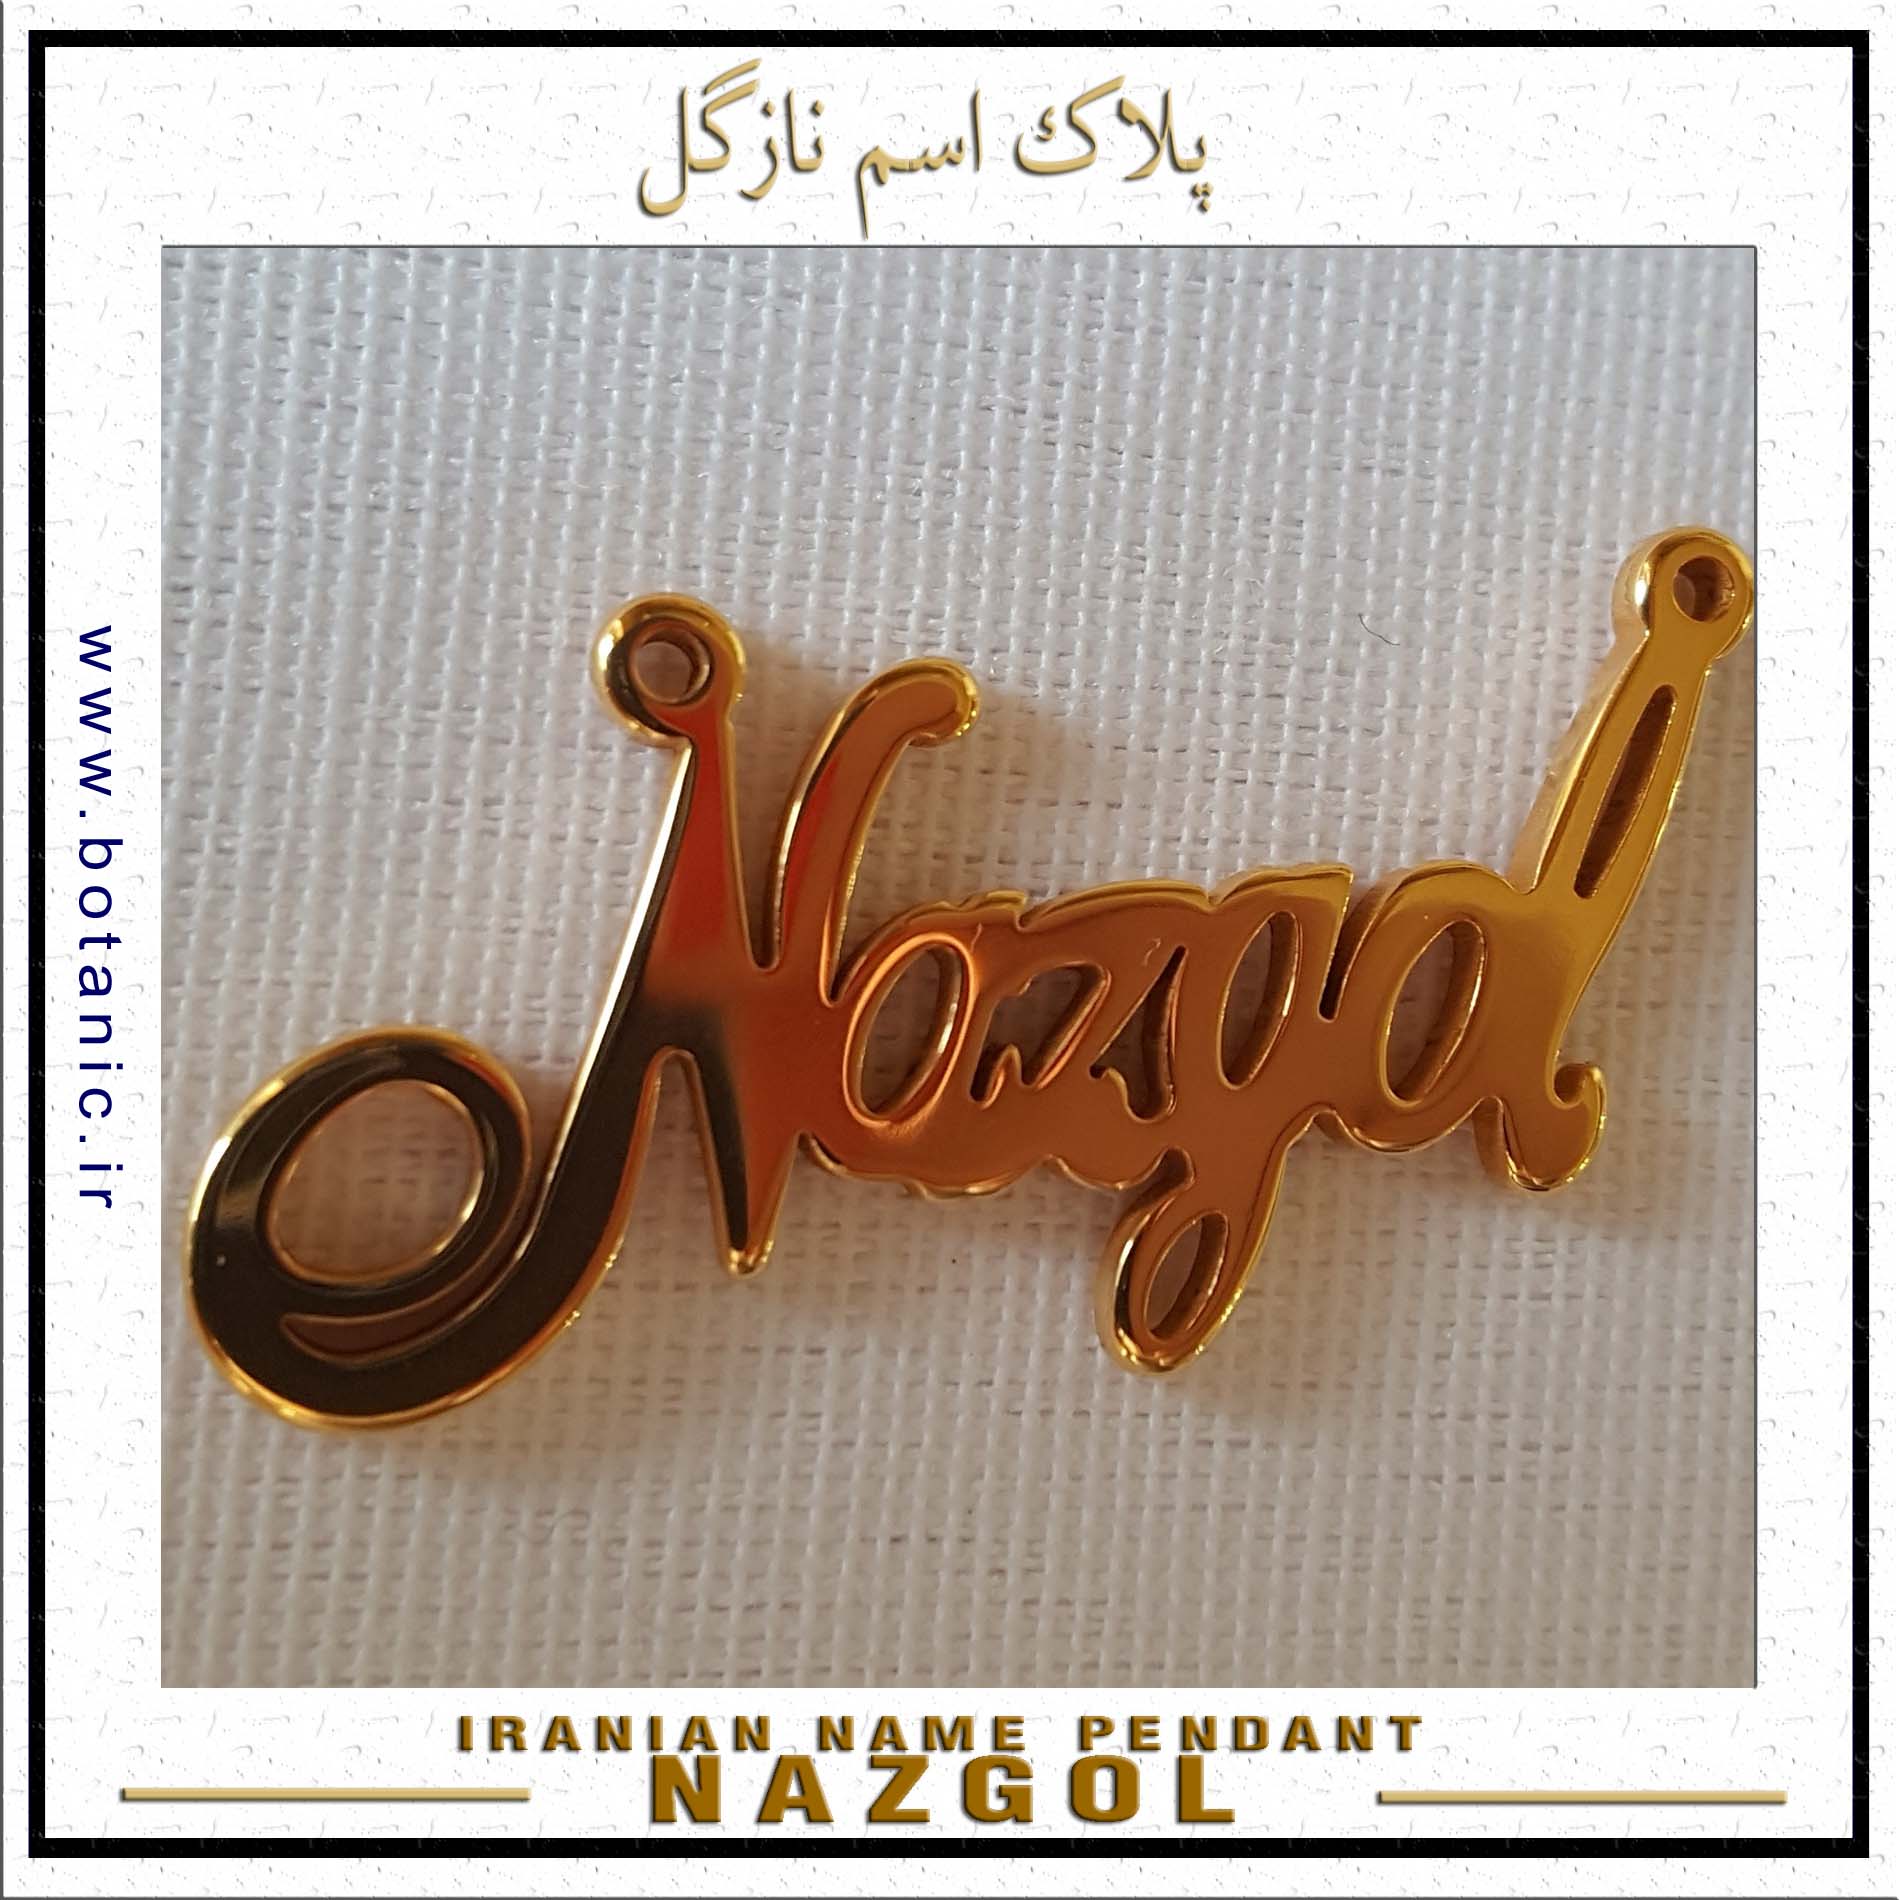 Iranian Name Pendant Nazgol